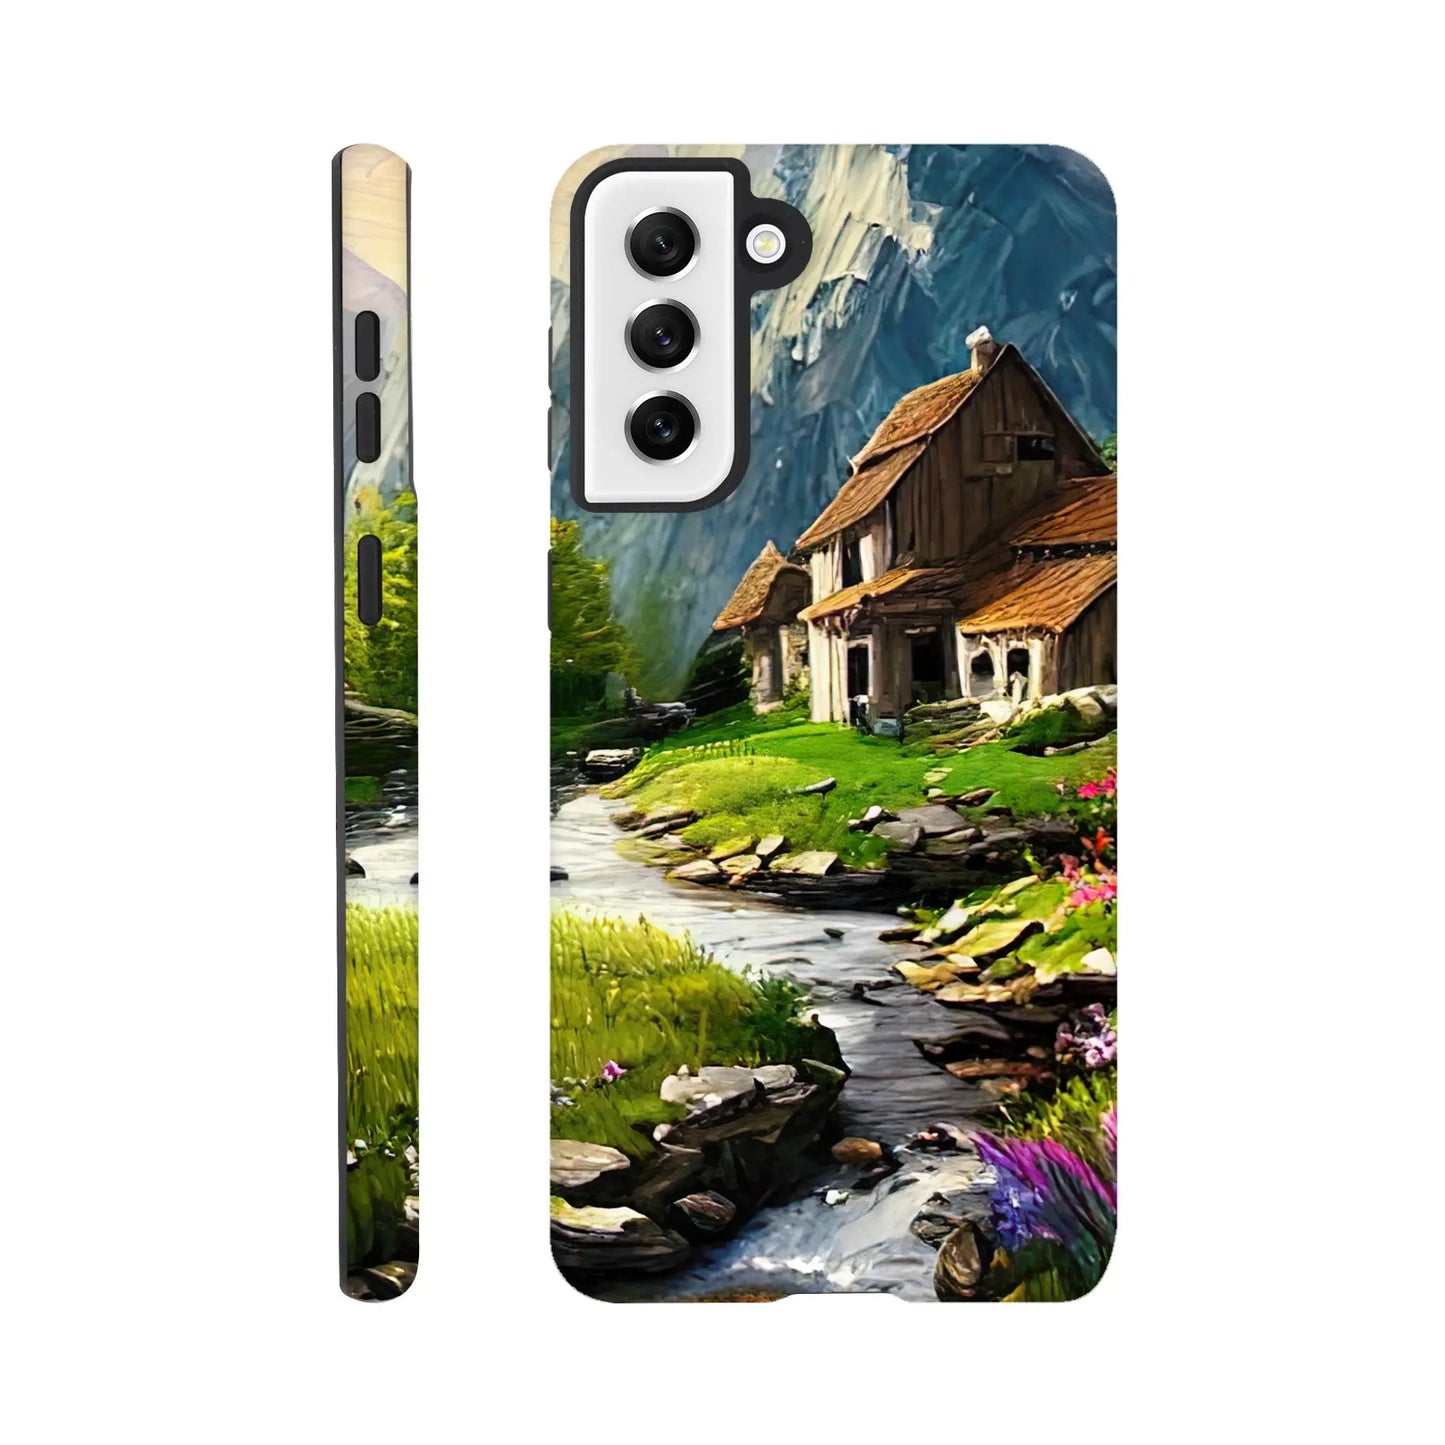 Smartphone-Hülle "Hart" - Berglandschaft - Malerischer Stil, KI-Kunst RolConArt, Landschaften, Galaxy-S21-Plus